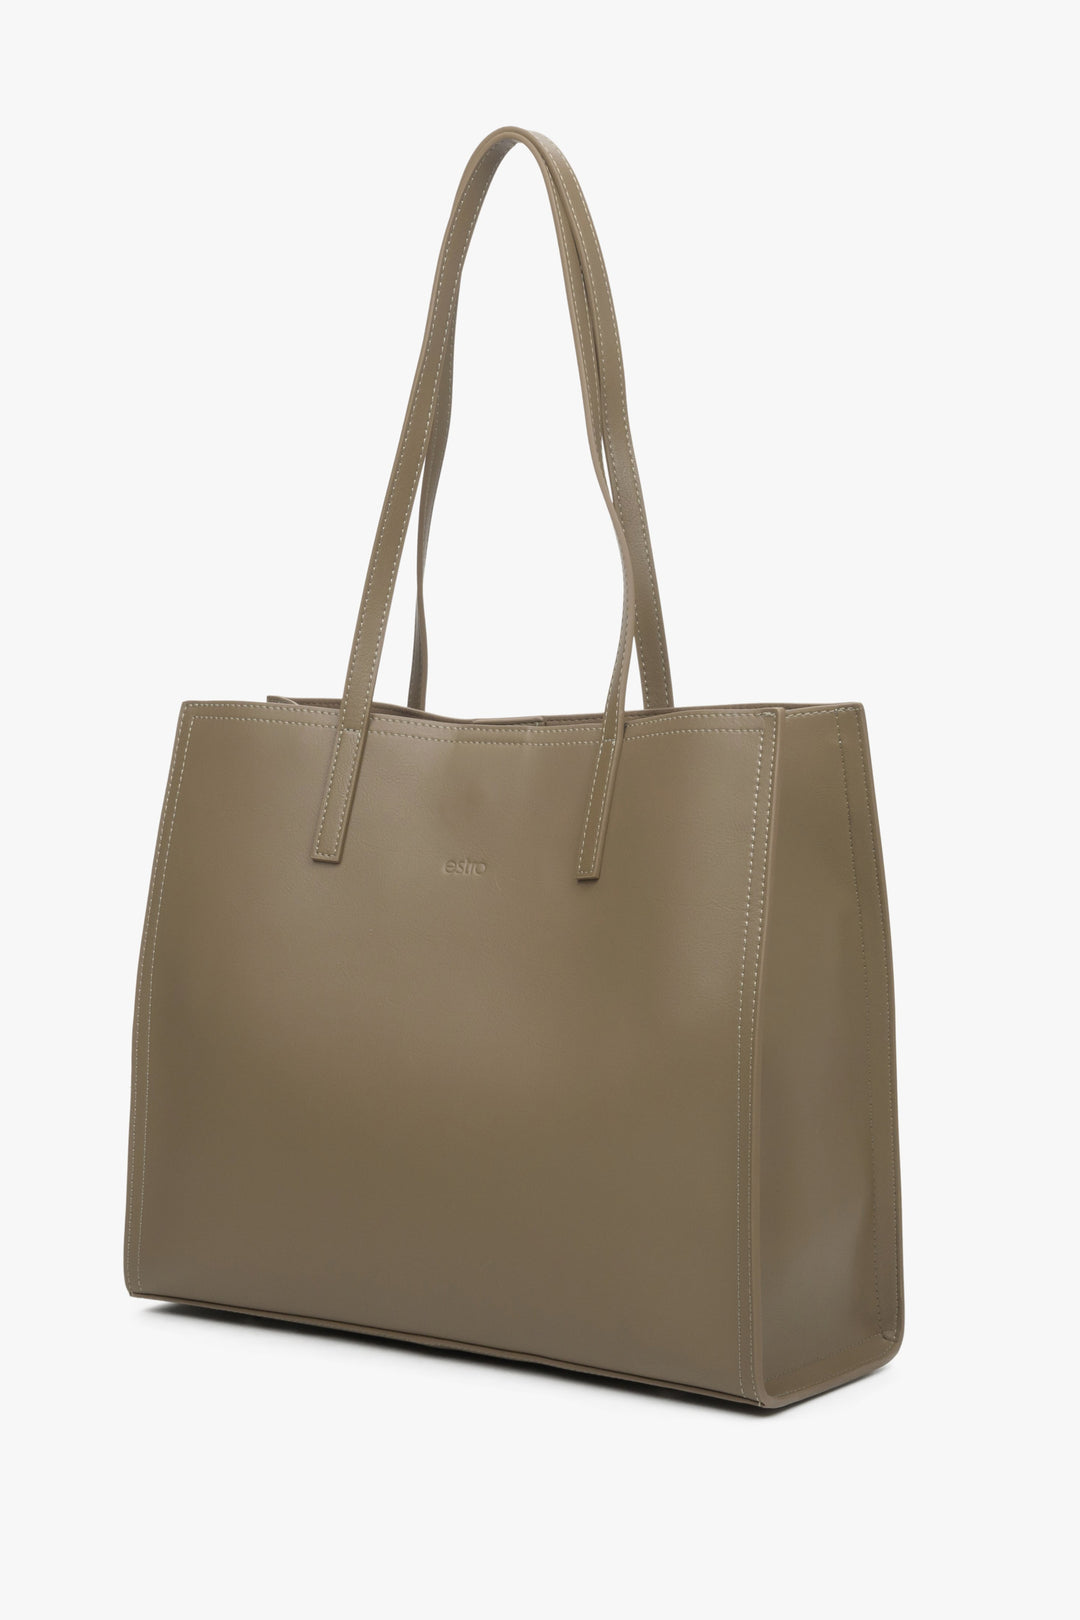 Brown leather women's shopper bag.